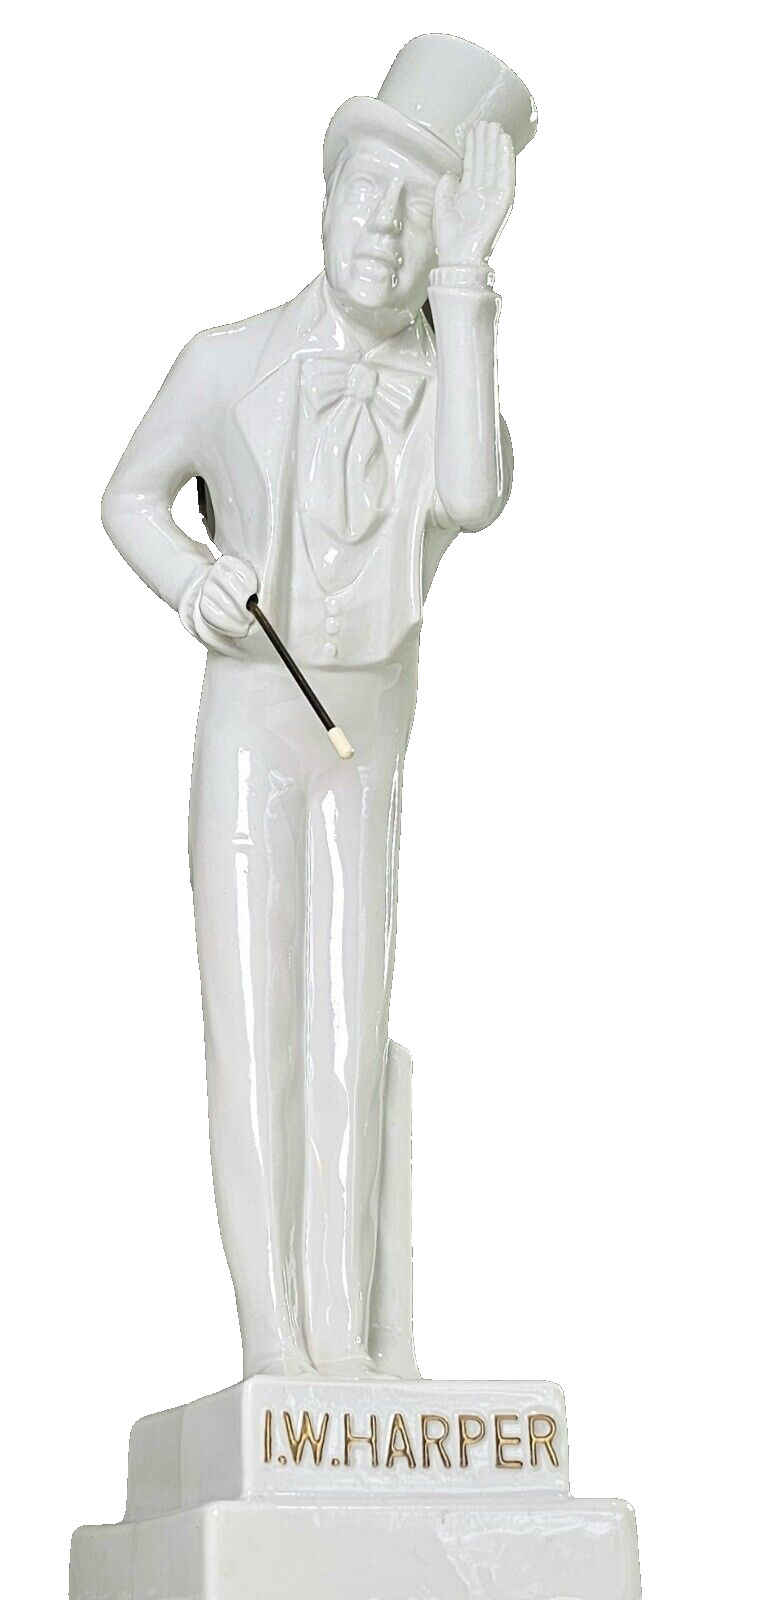 Vintage I W Harper The Gentleman Decanter White Hall Ceramic Man w Cane Statue